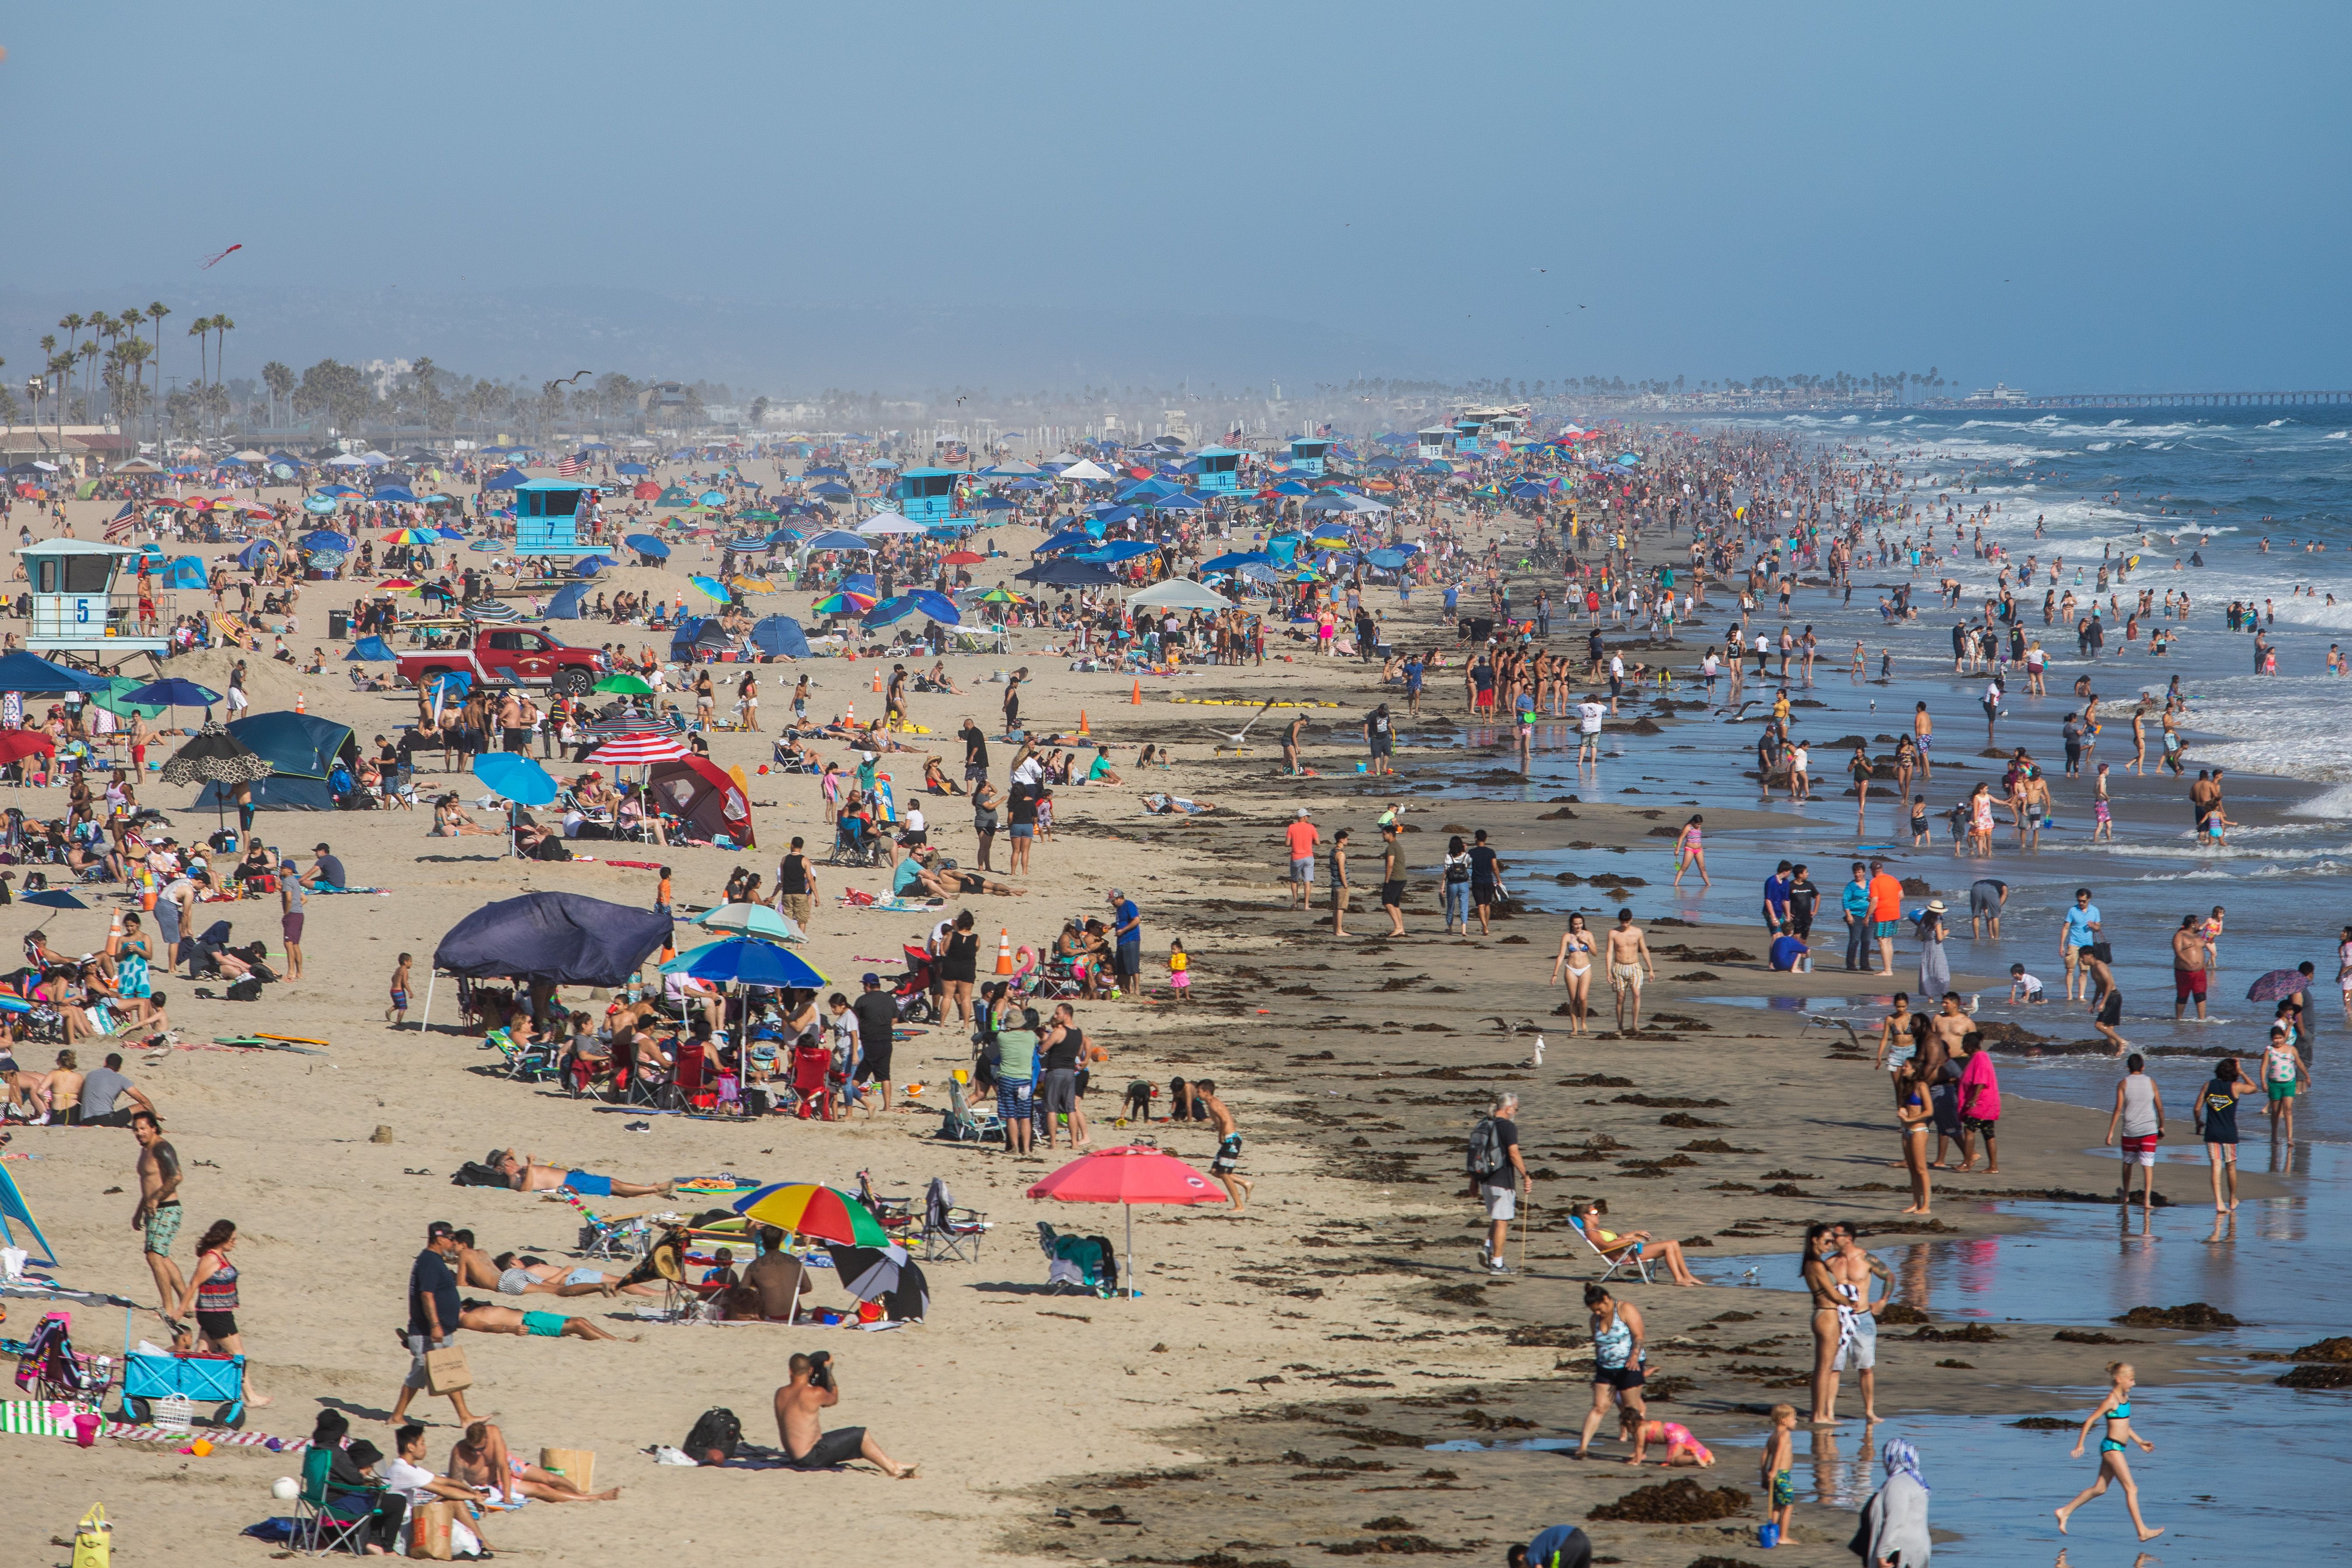 People enjoy the beach in Huntington Beach, California, on June 14.